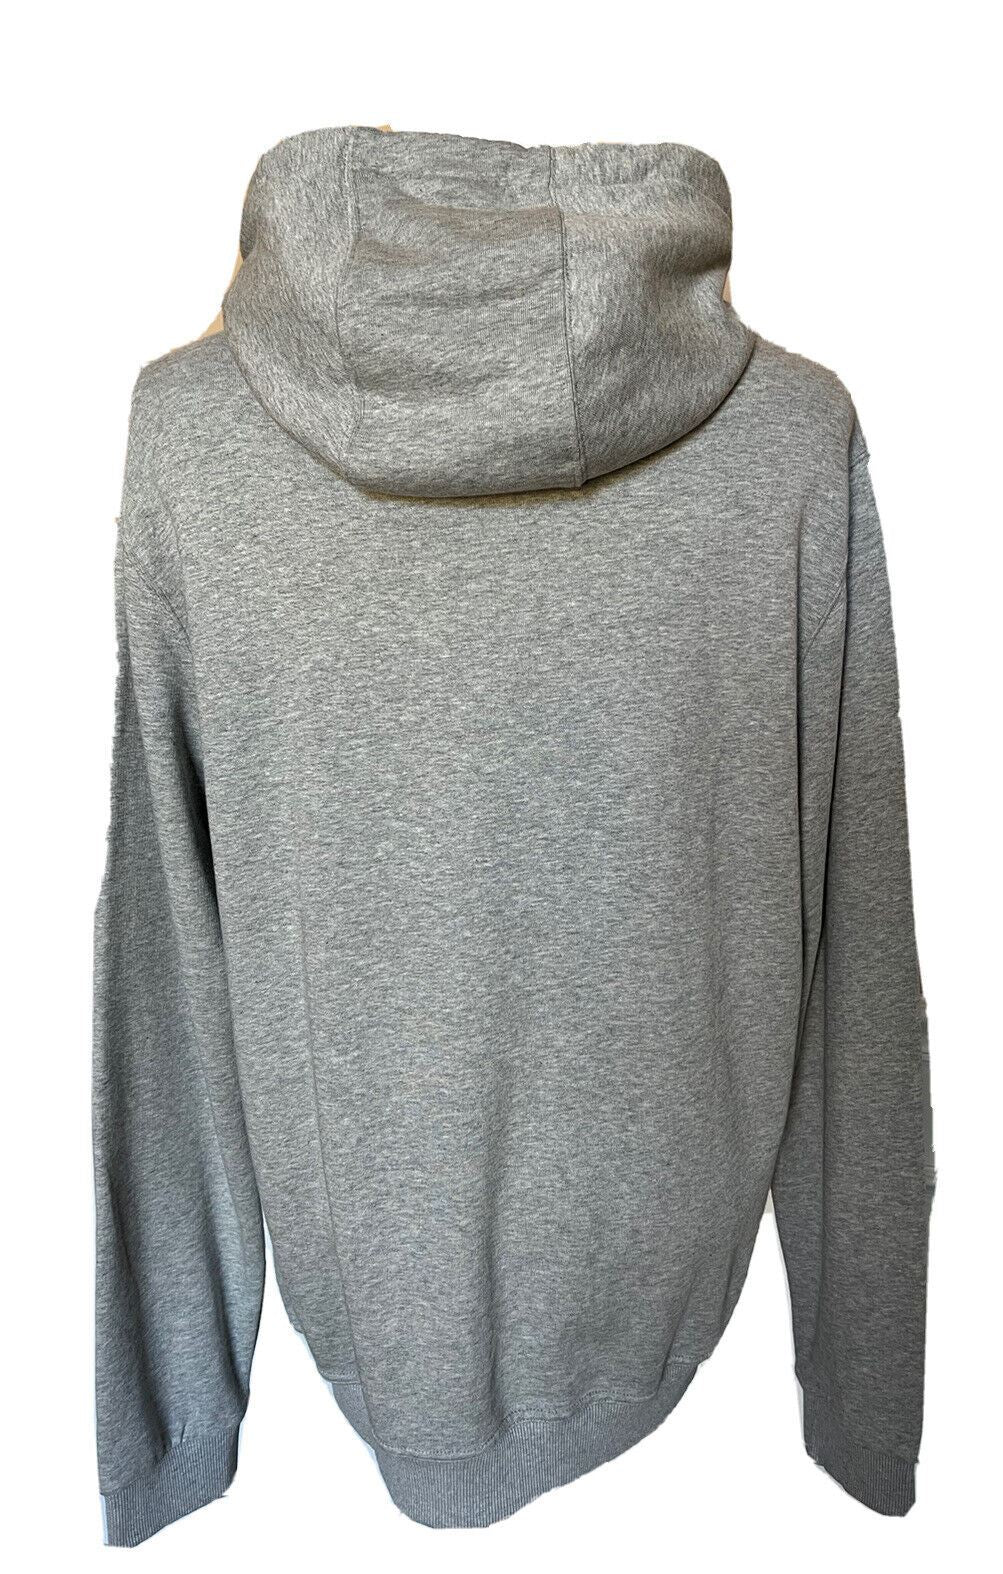 Neu mit Etikett: 650 $ Burberry Swanley Grey Montage Print Sweatshirt mit Kapuze L Portugal 